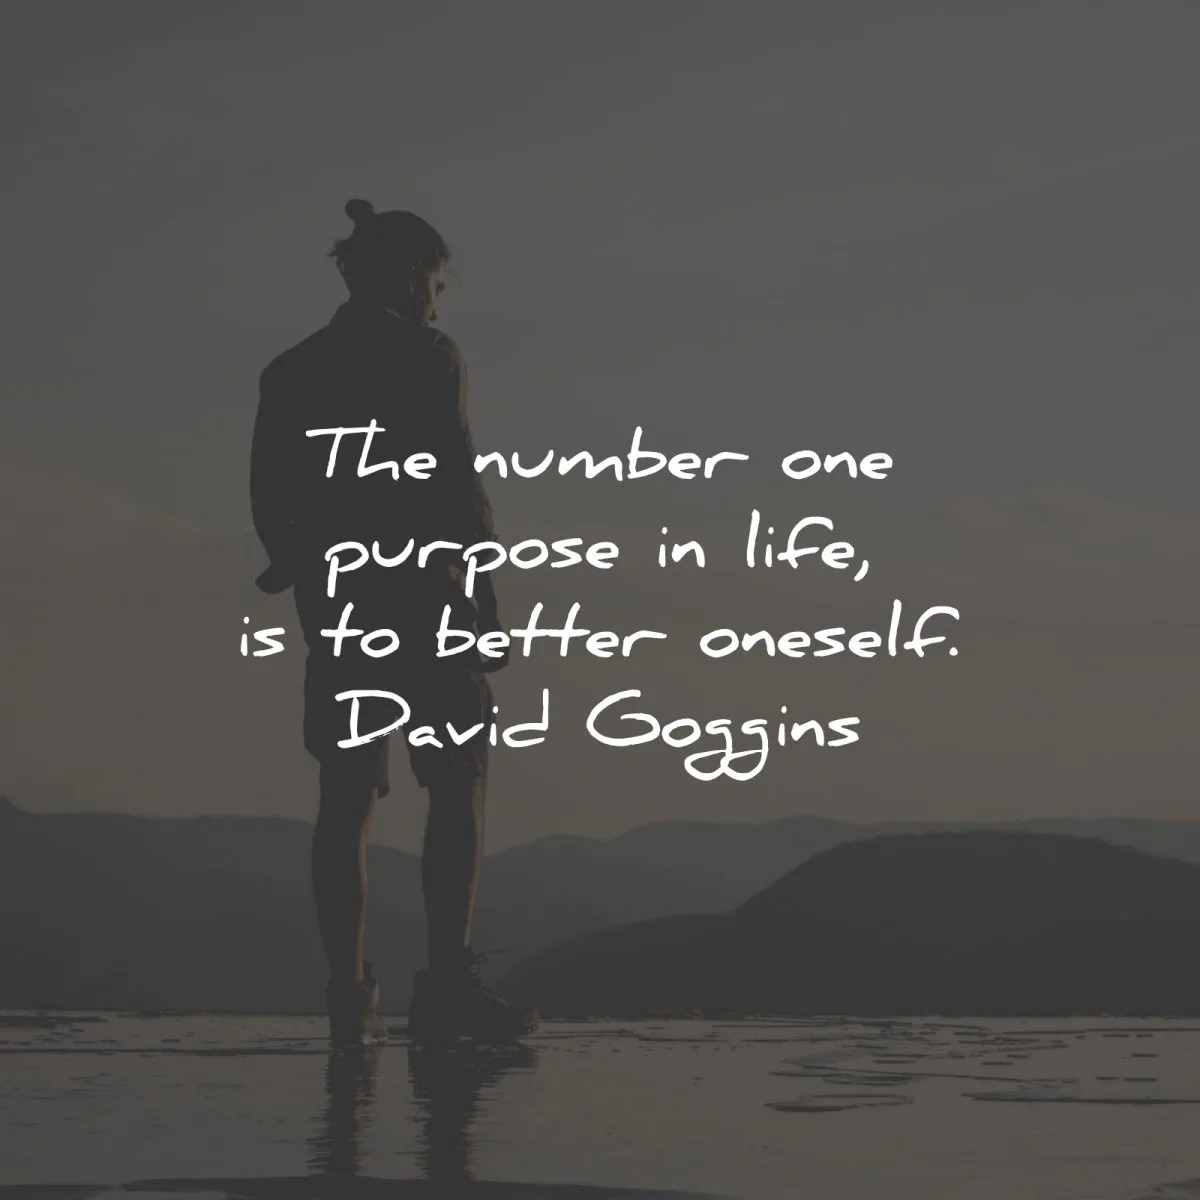 david goggins quotes number one purpose life better oneself wisdom